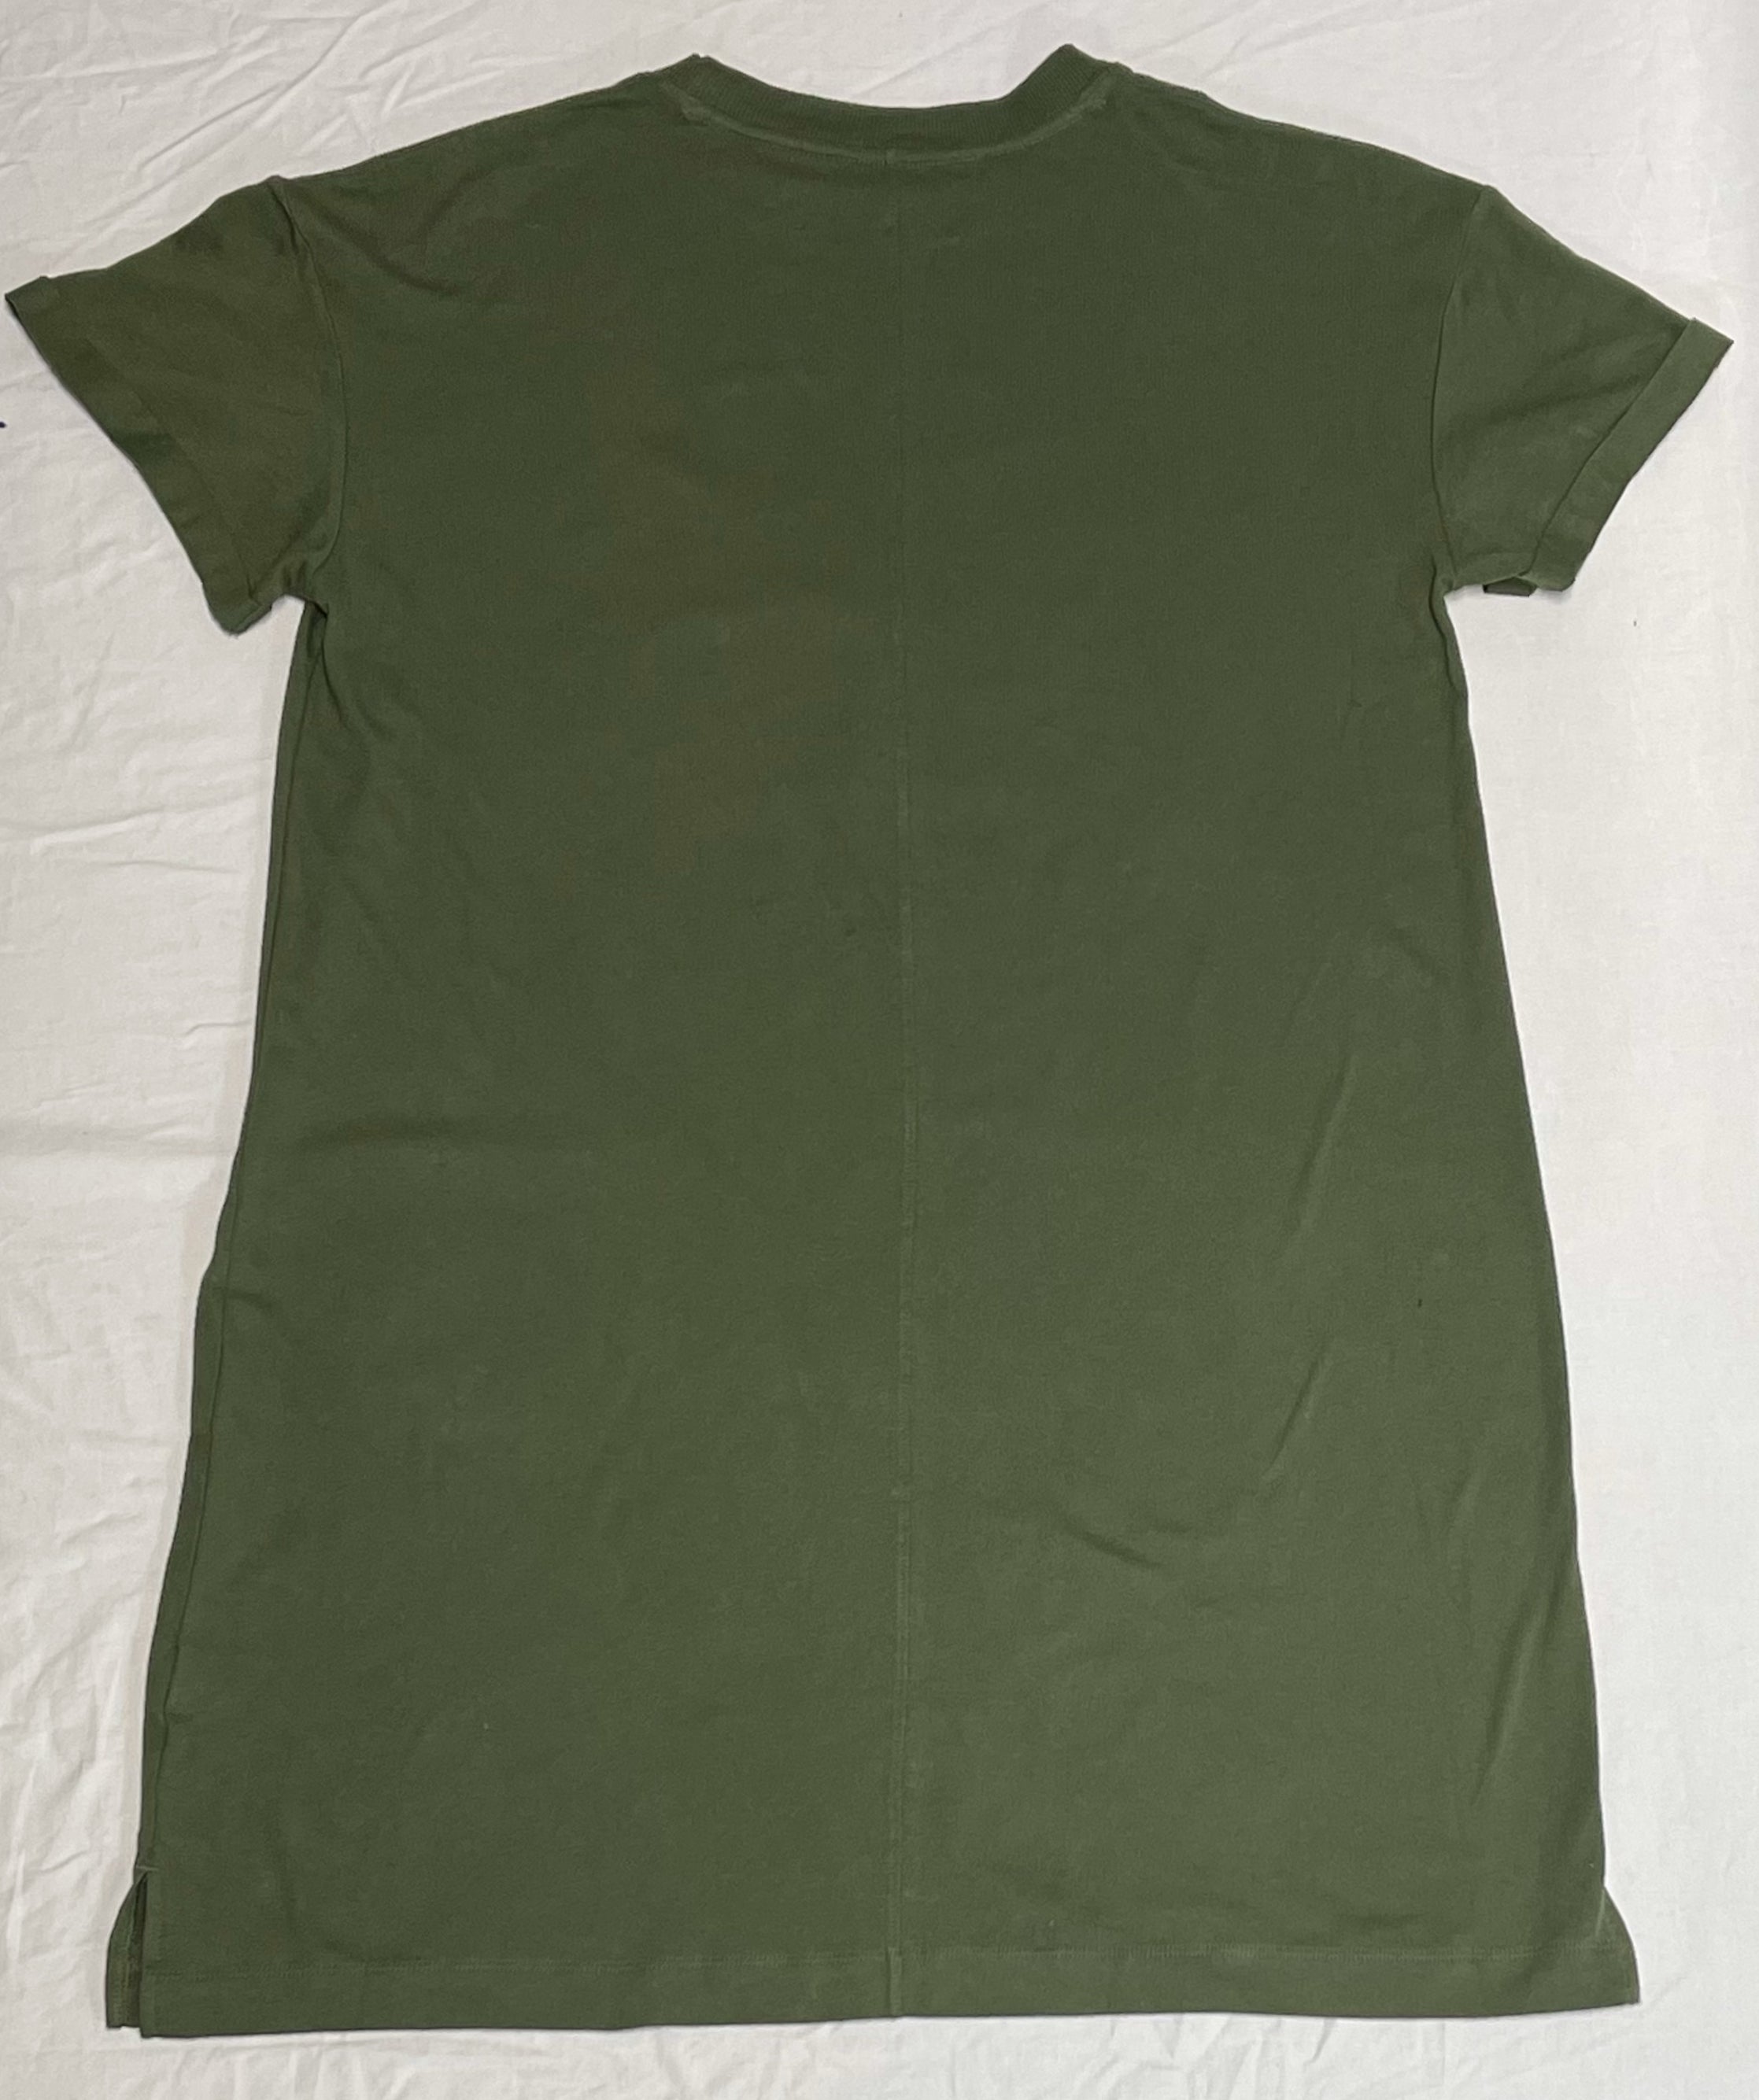 BIG MOUNTAIN BAND -  REGGAE PLANET FEMALE DRESS ARMY GREEN (EXTRA LARGE)  (BIG MOUNTAIN MERCHANDISE)